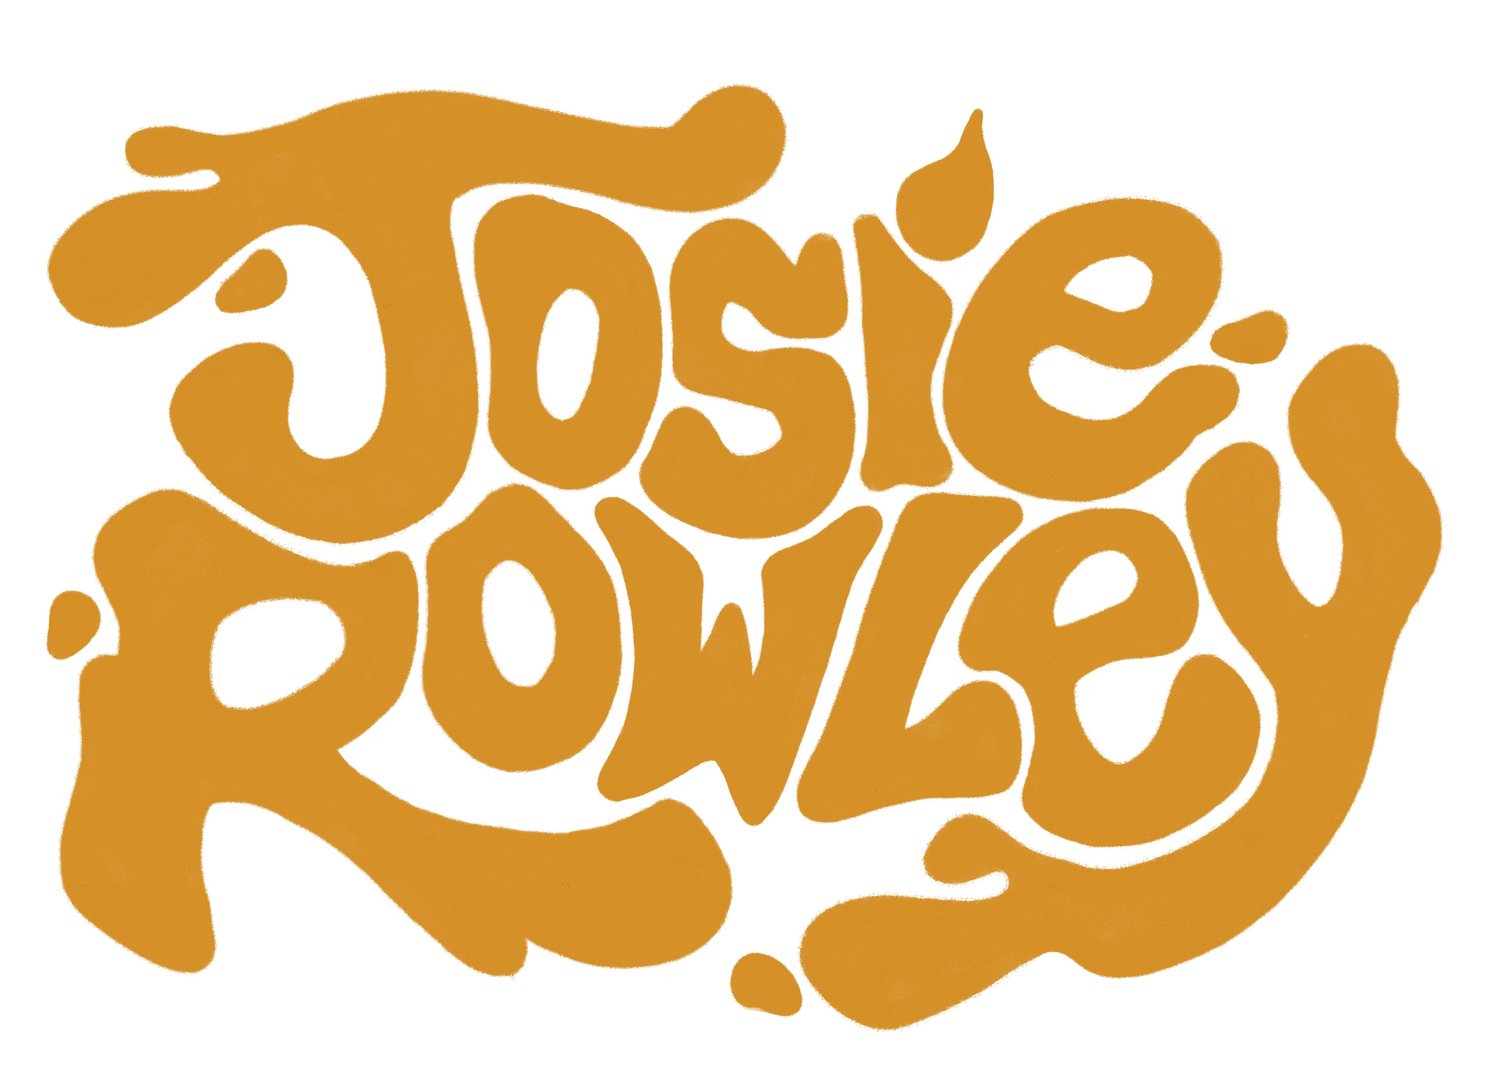 Josie Rowley Illustration